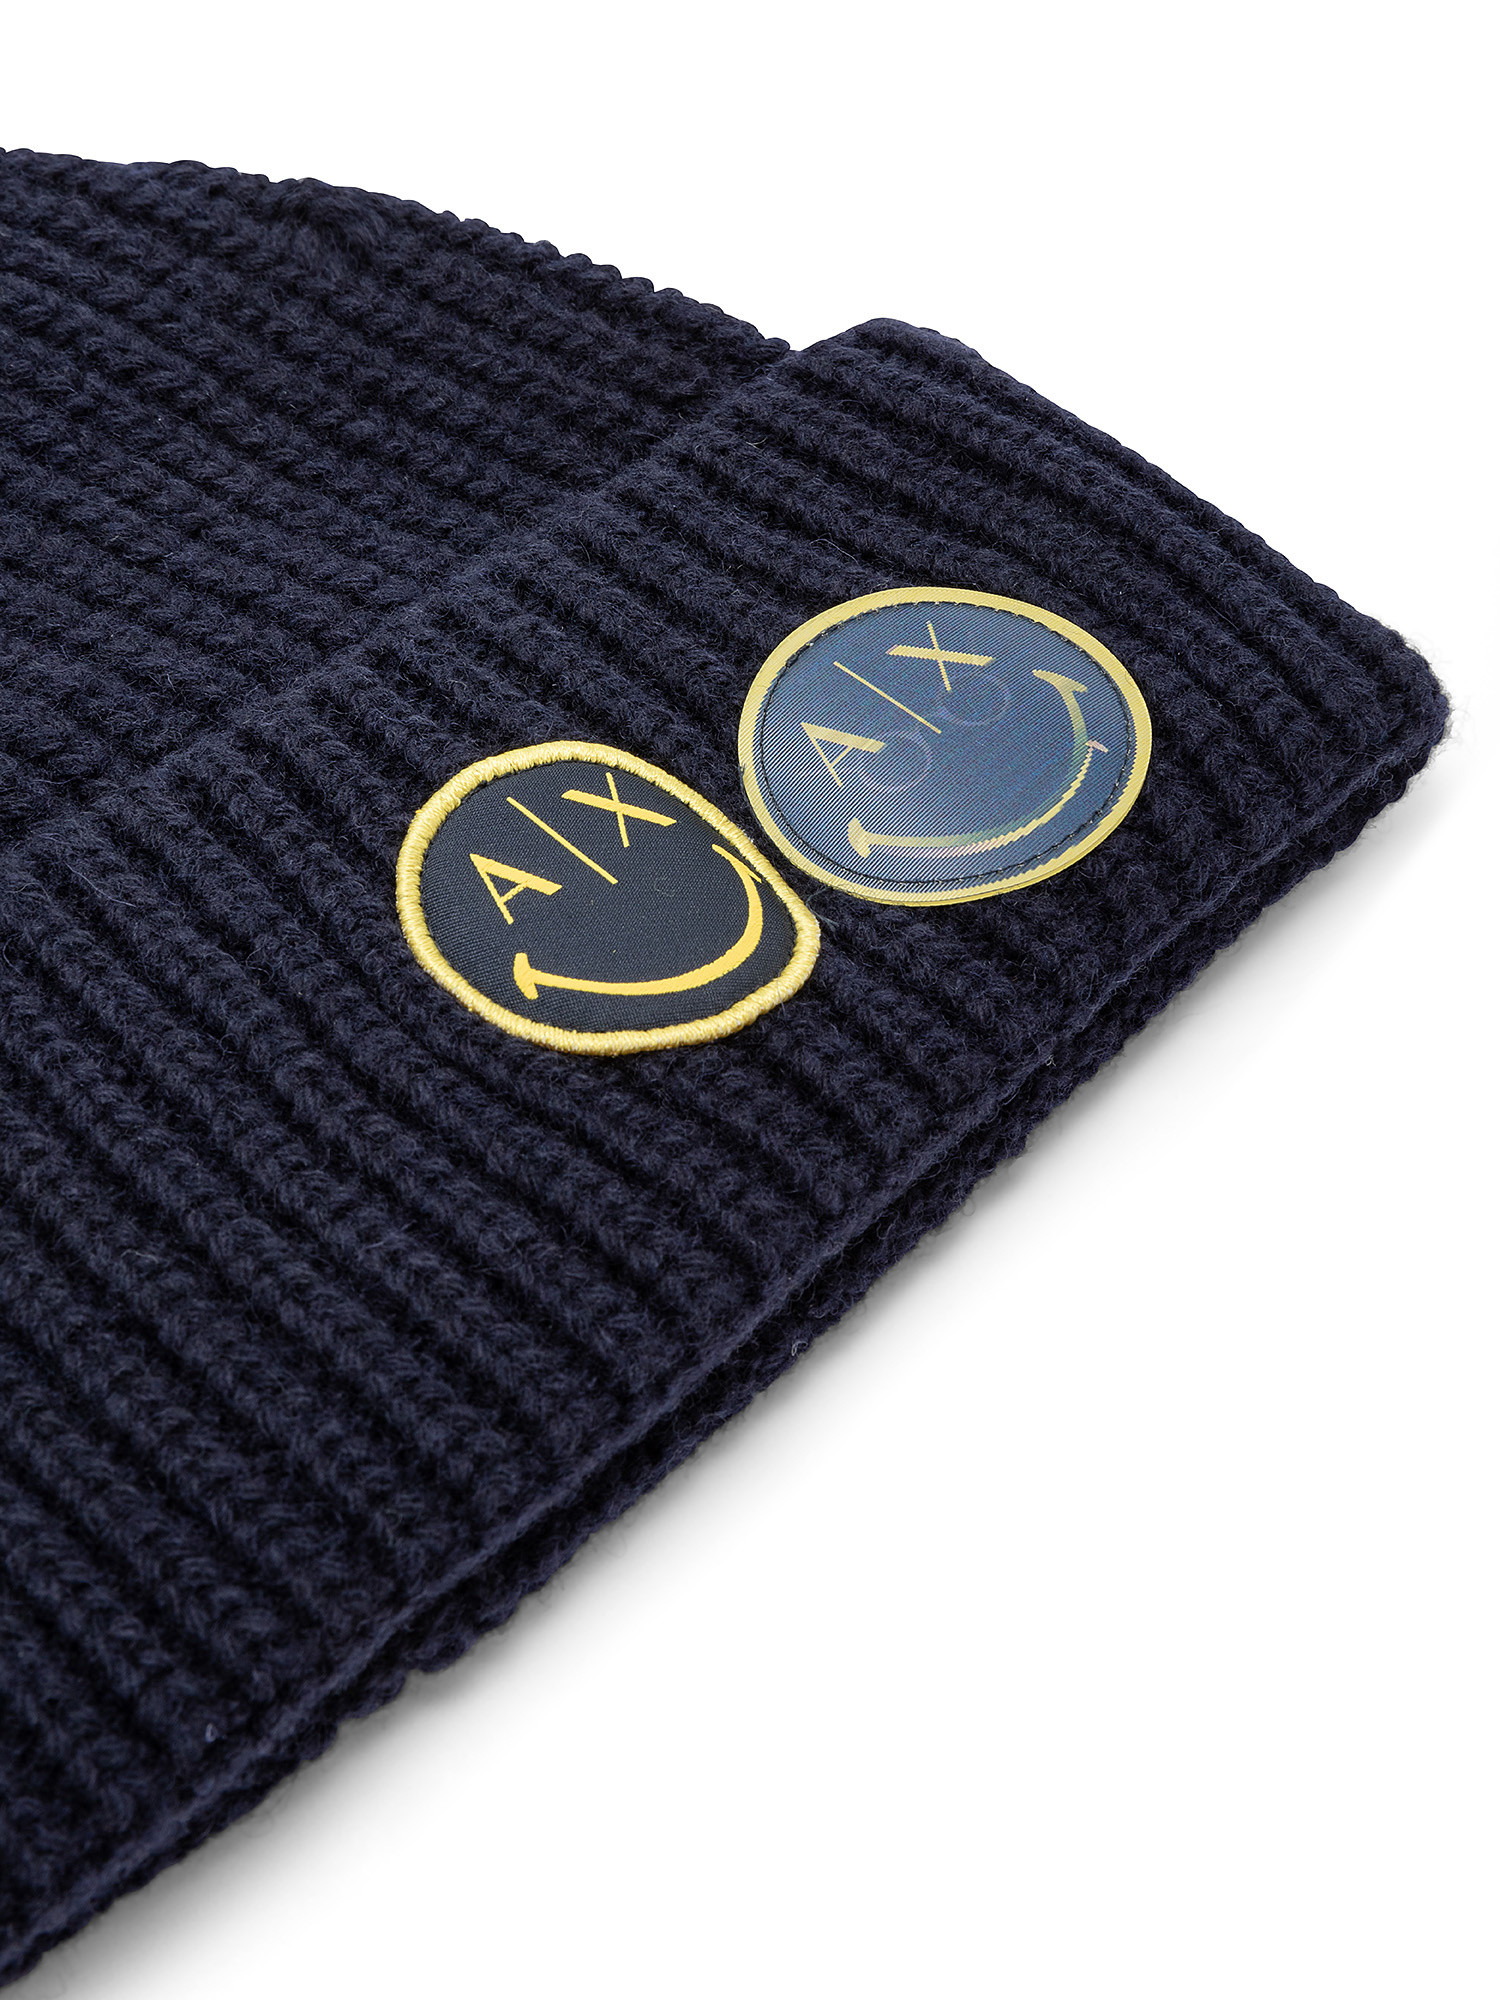 Armani Exchange - Cappello Beanie con applicazioni, Blu scuro, large image number 1